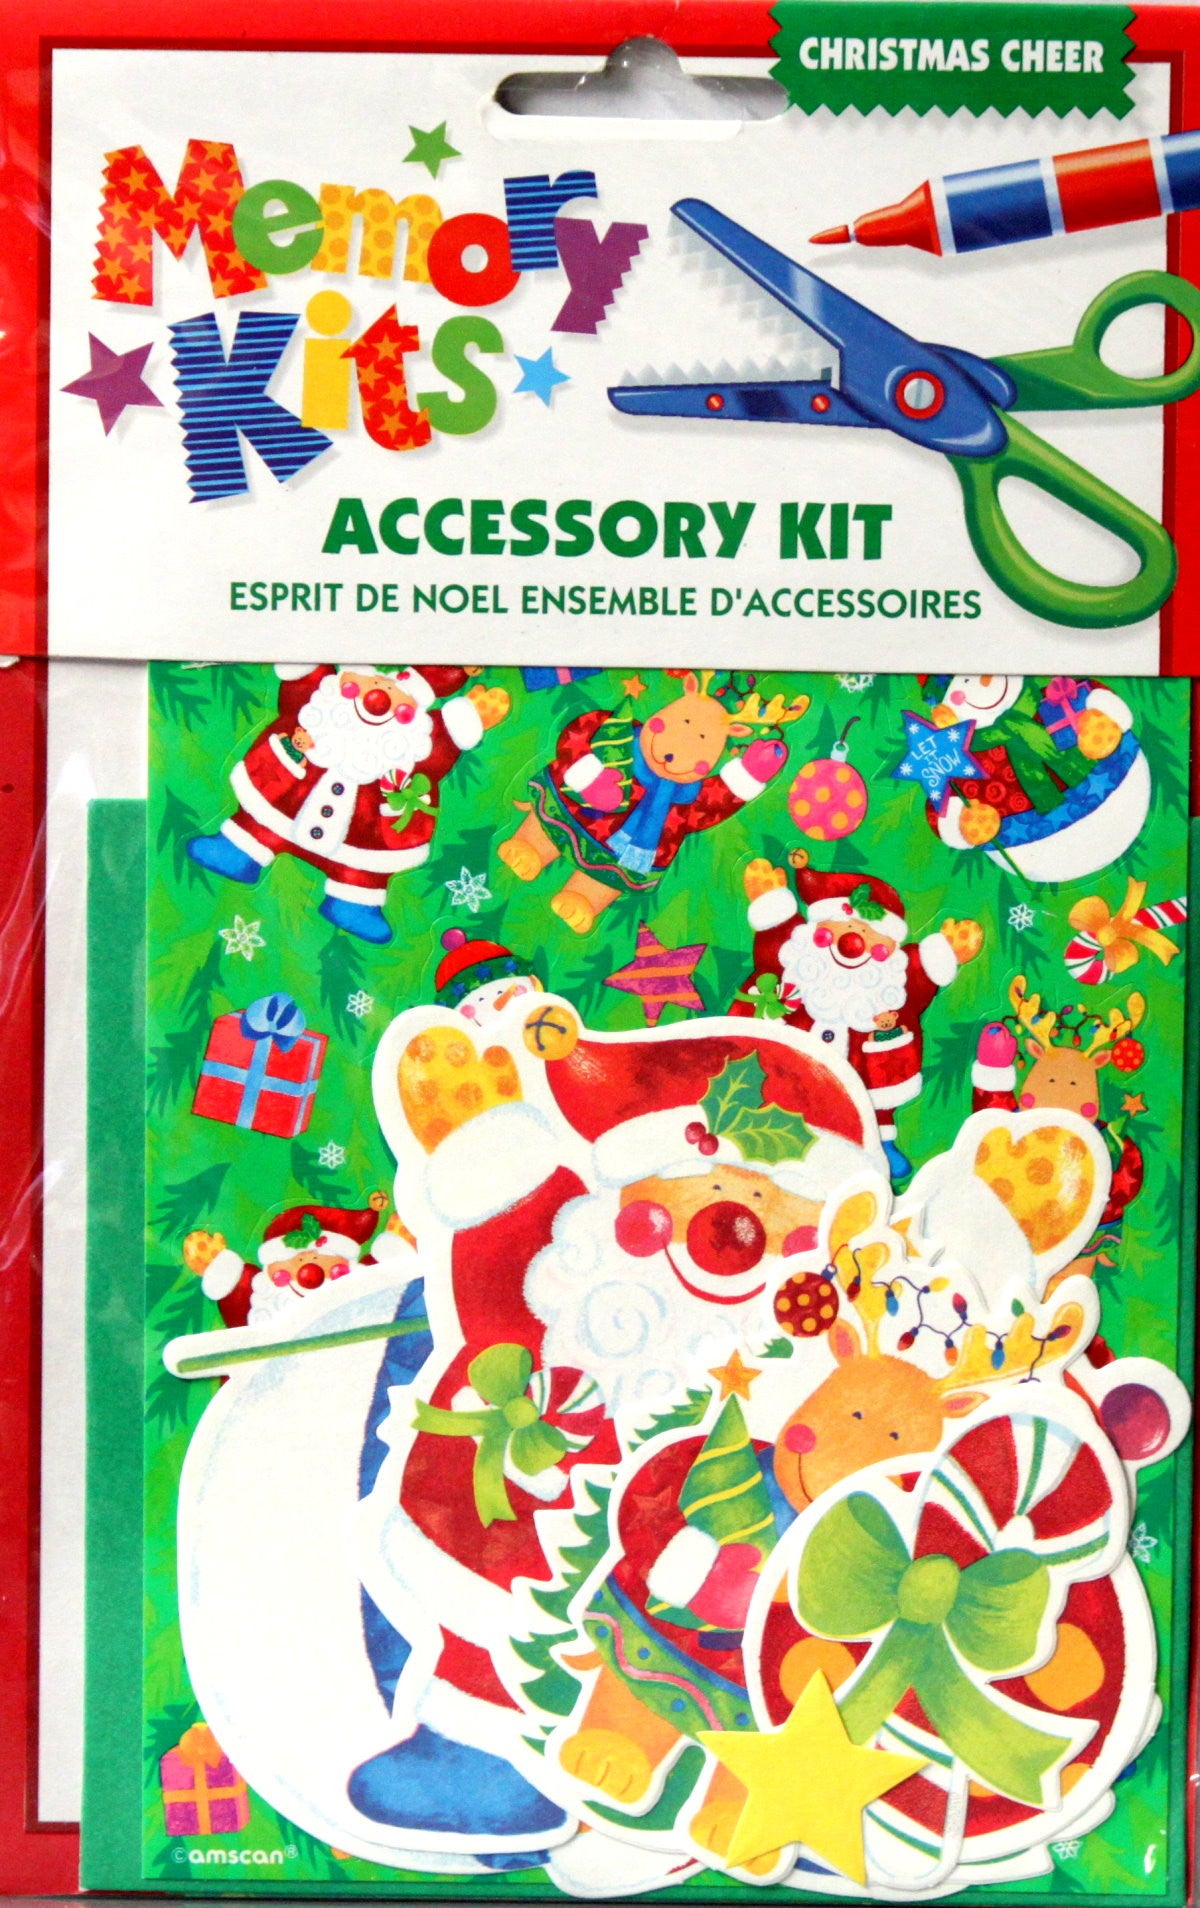 Memory Kits Christmas Cheer Accessory Kit - SCRAPBOOKFARE